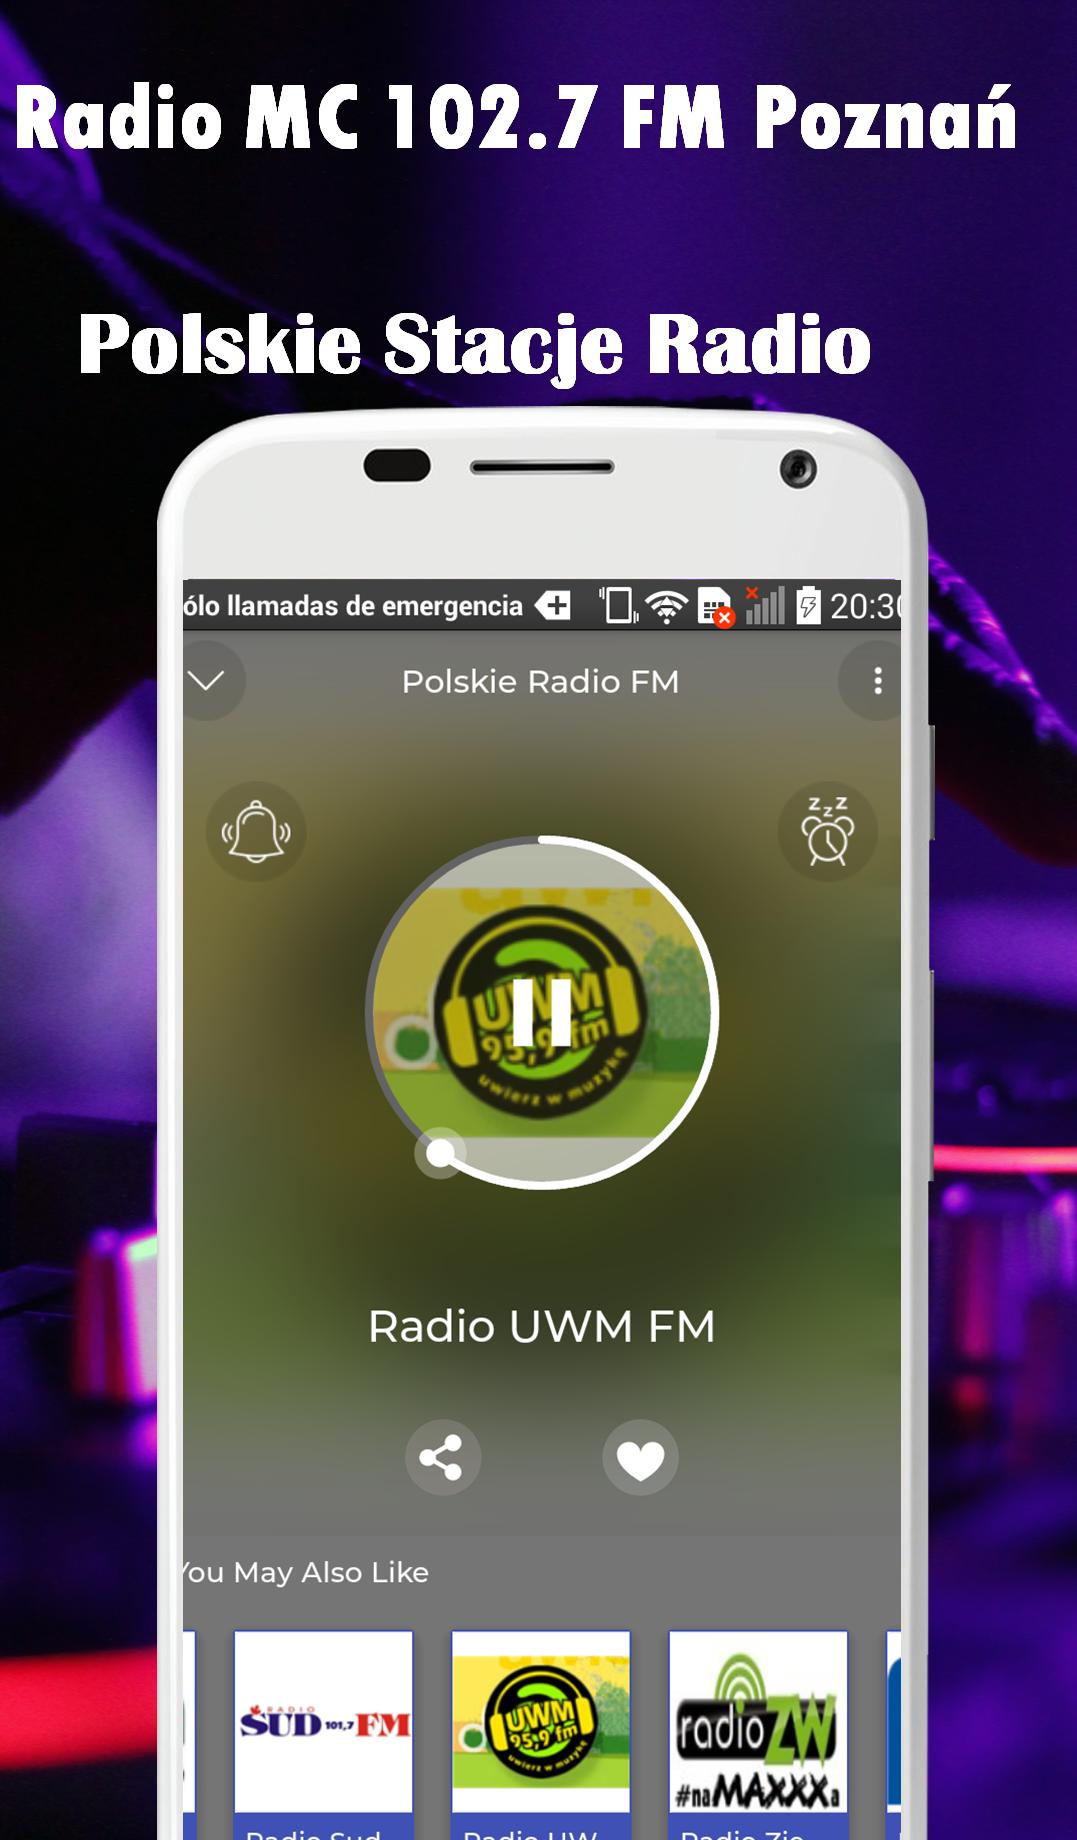 Radio MC 102.7 FM Poznań for Android - APK Download